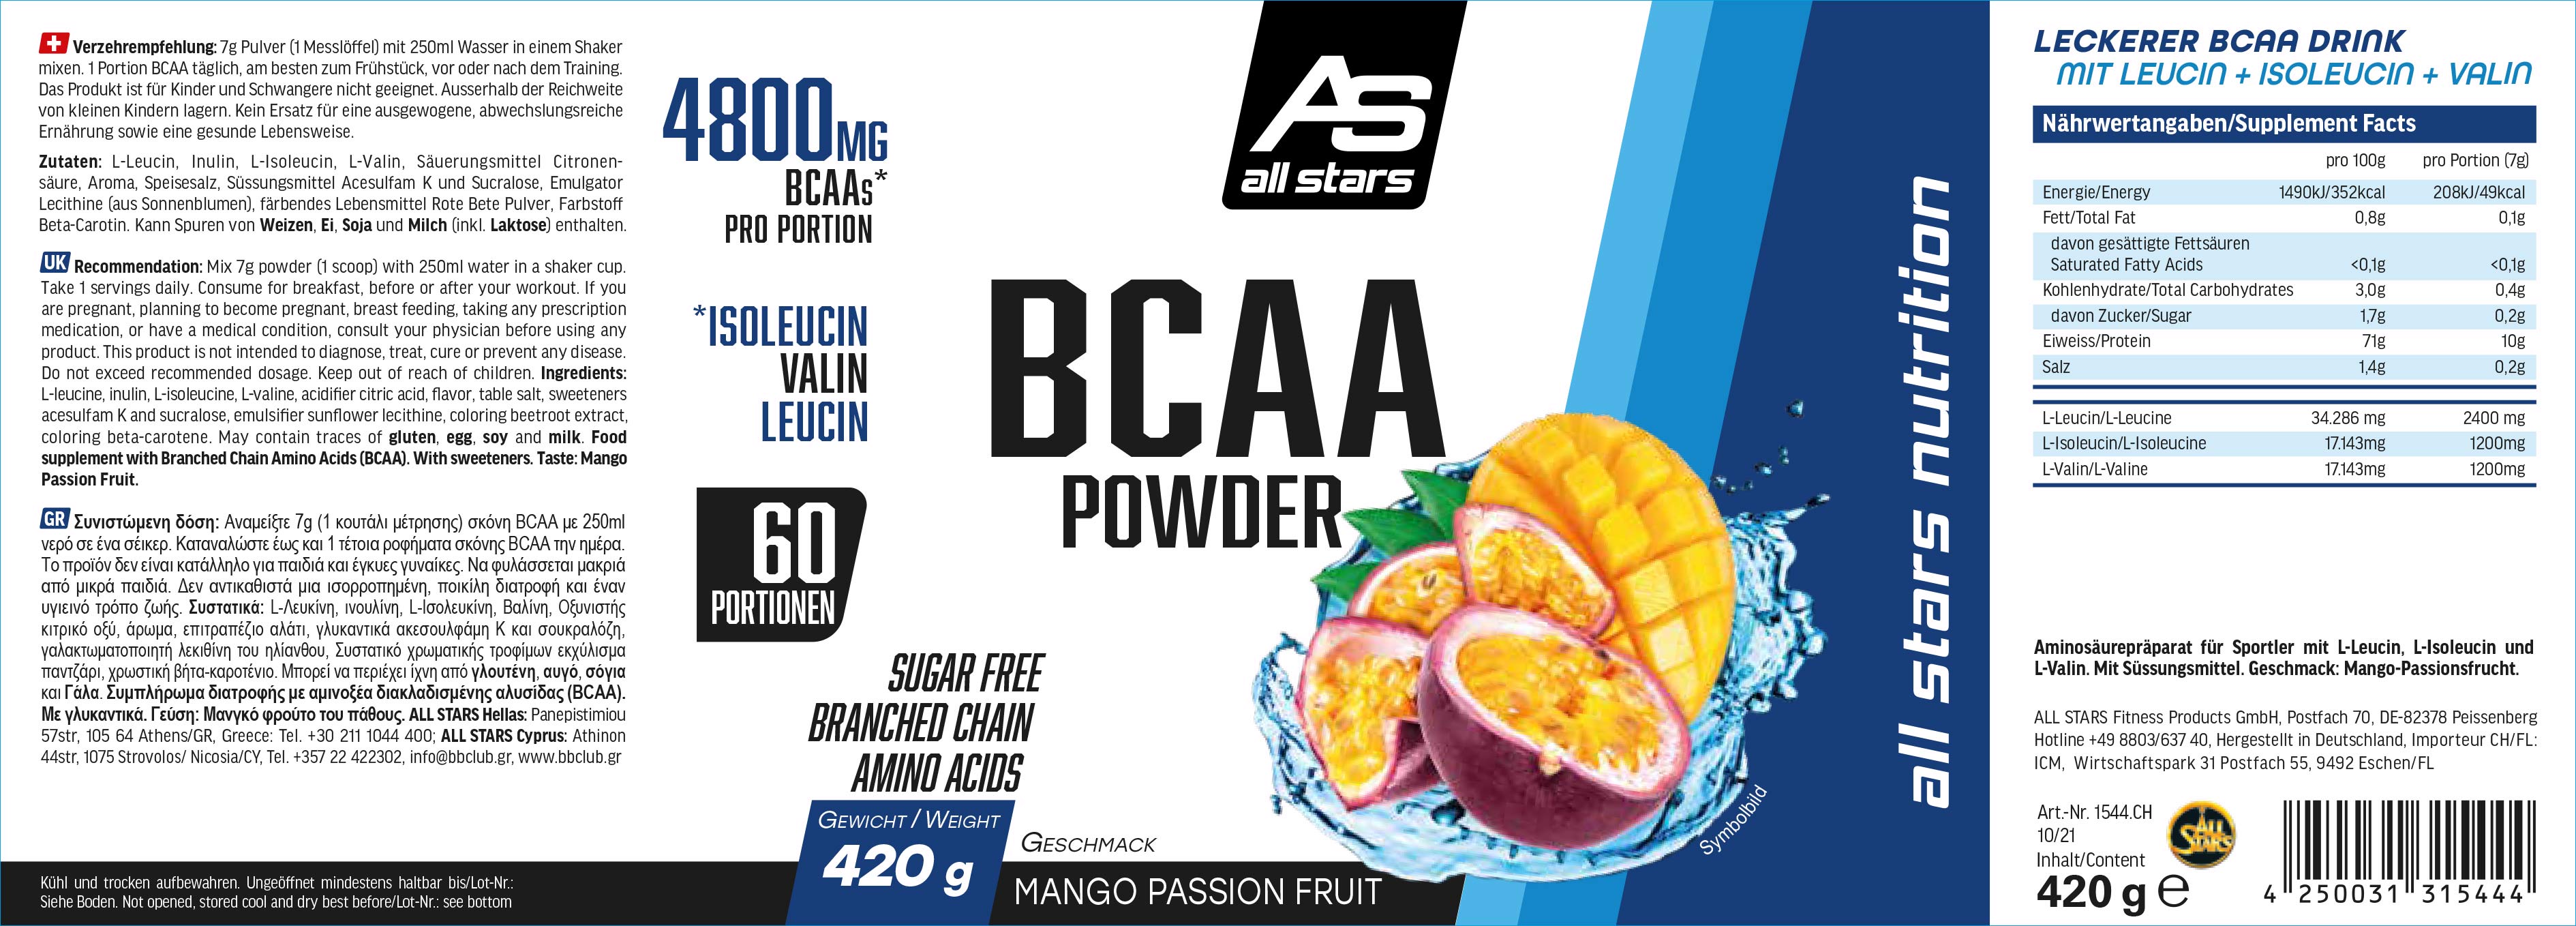 All Stars BCAA Powder 420g 